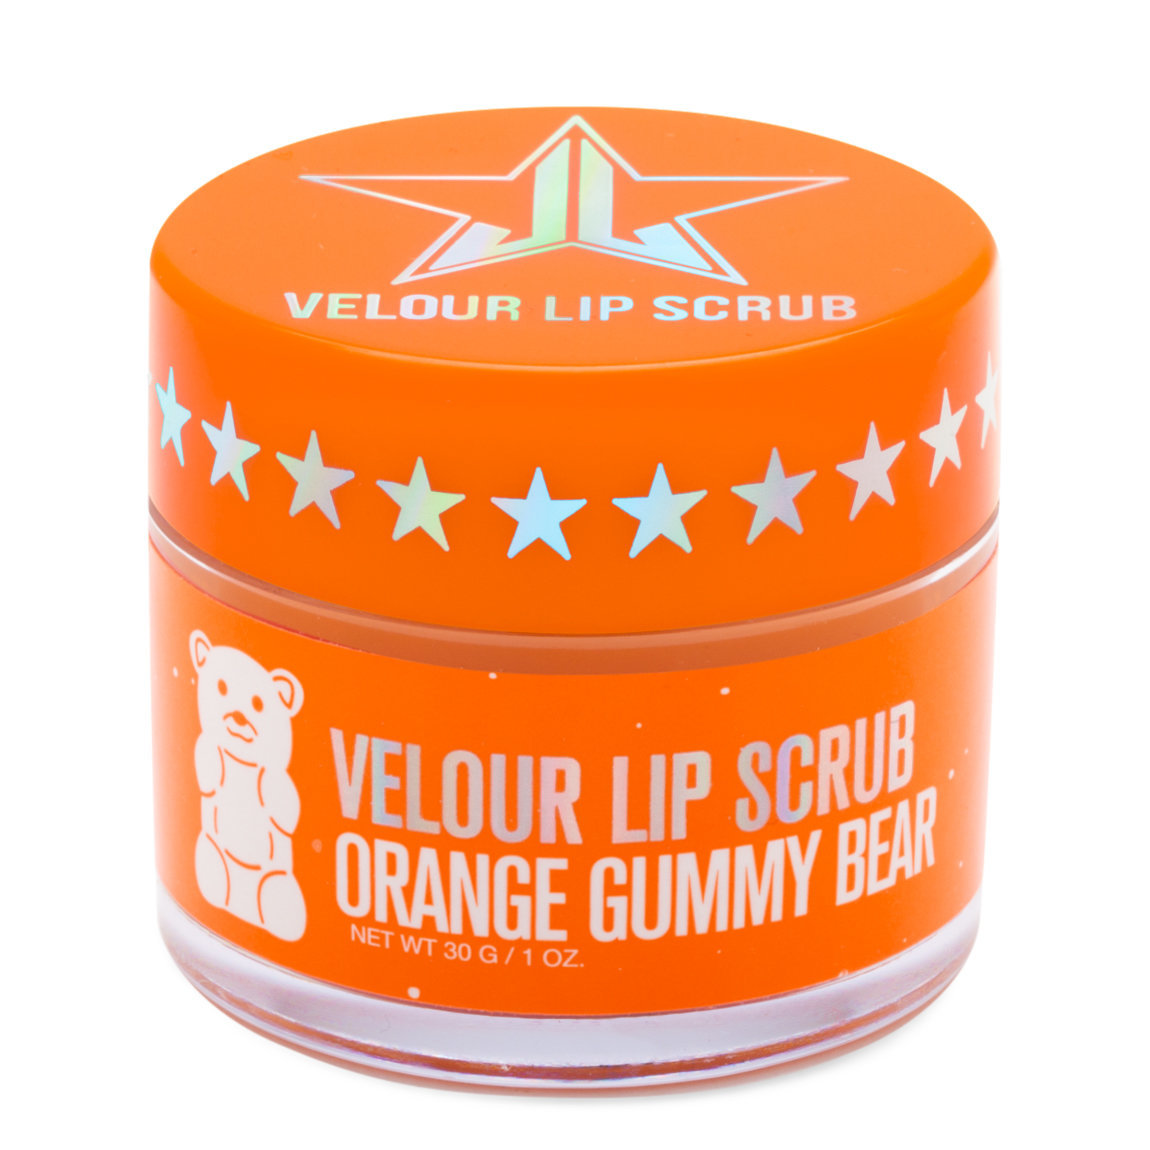 Jeffree Star Cosmetics Velour Lip Scrub Orange Gummy Bear | Beautylish